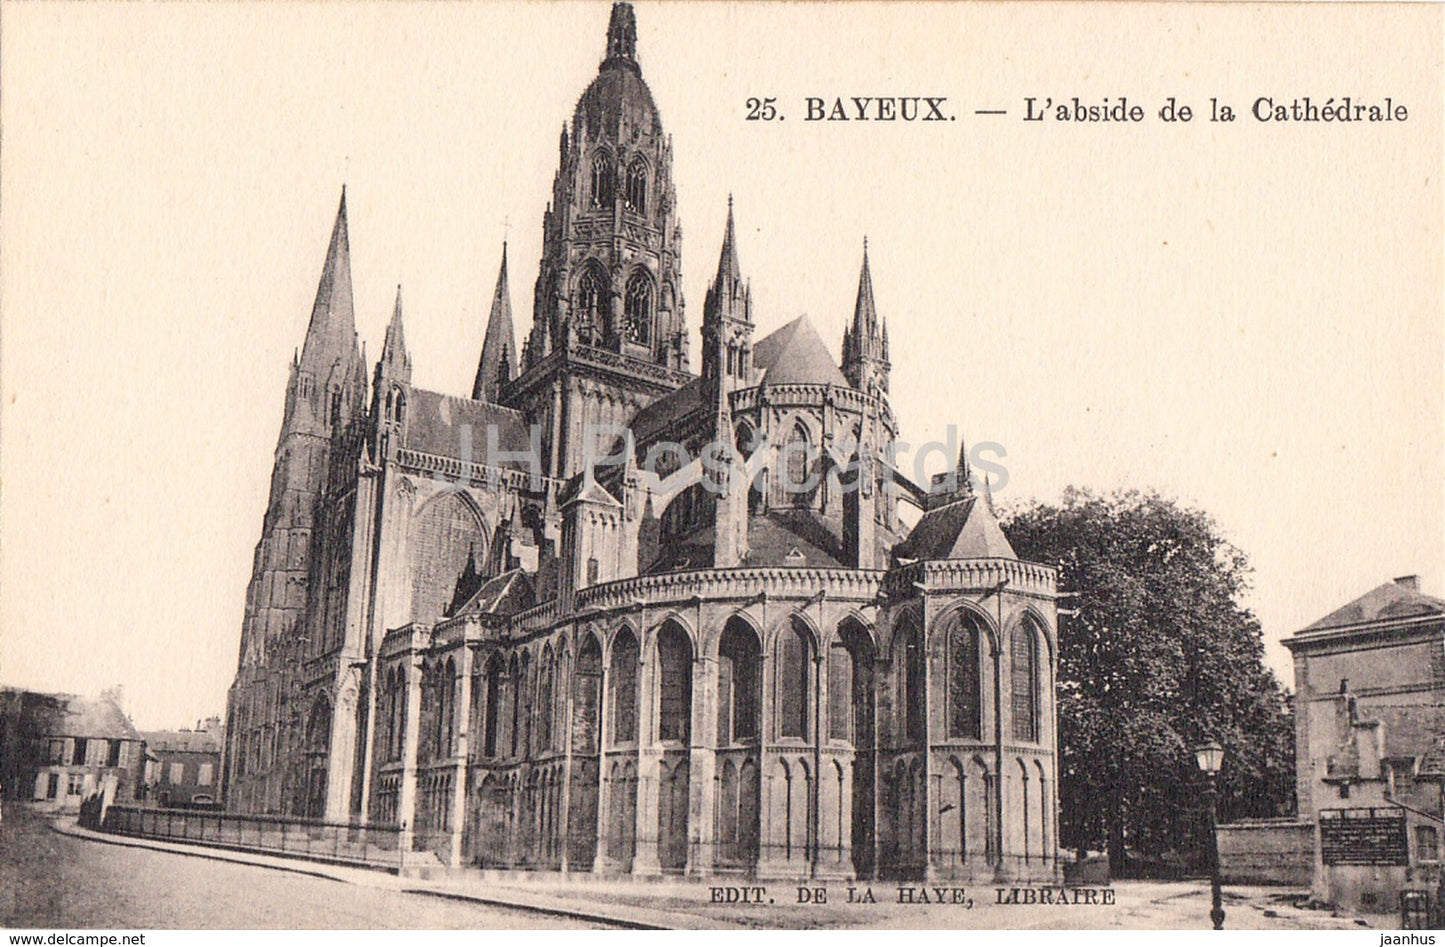 Bayeux - L'abside de la Cathedrale - 25 - cathedral - old postcard - France - unused